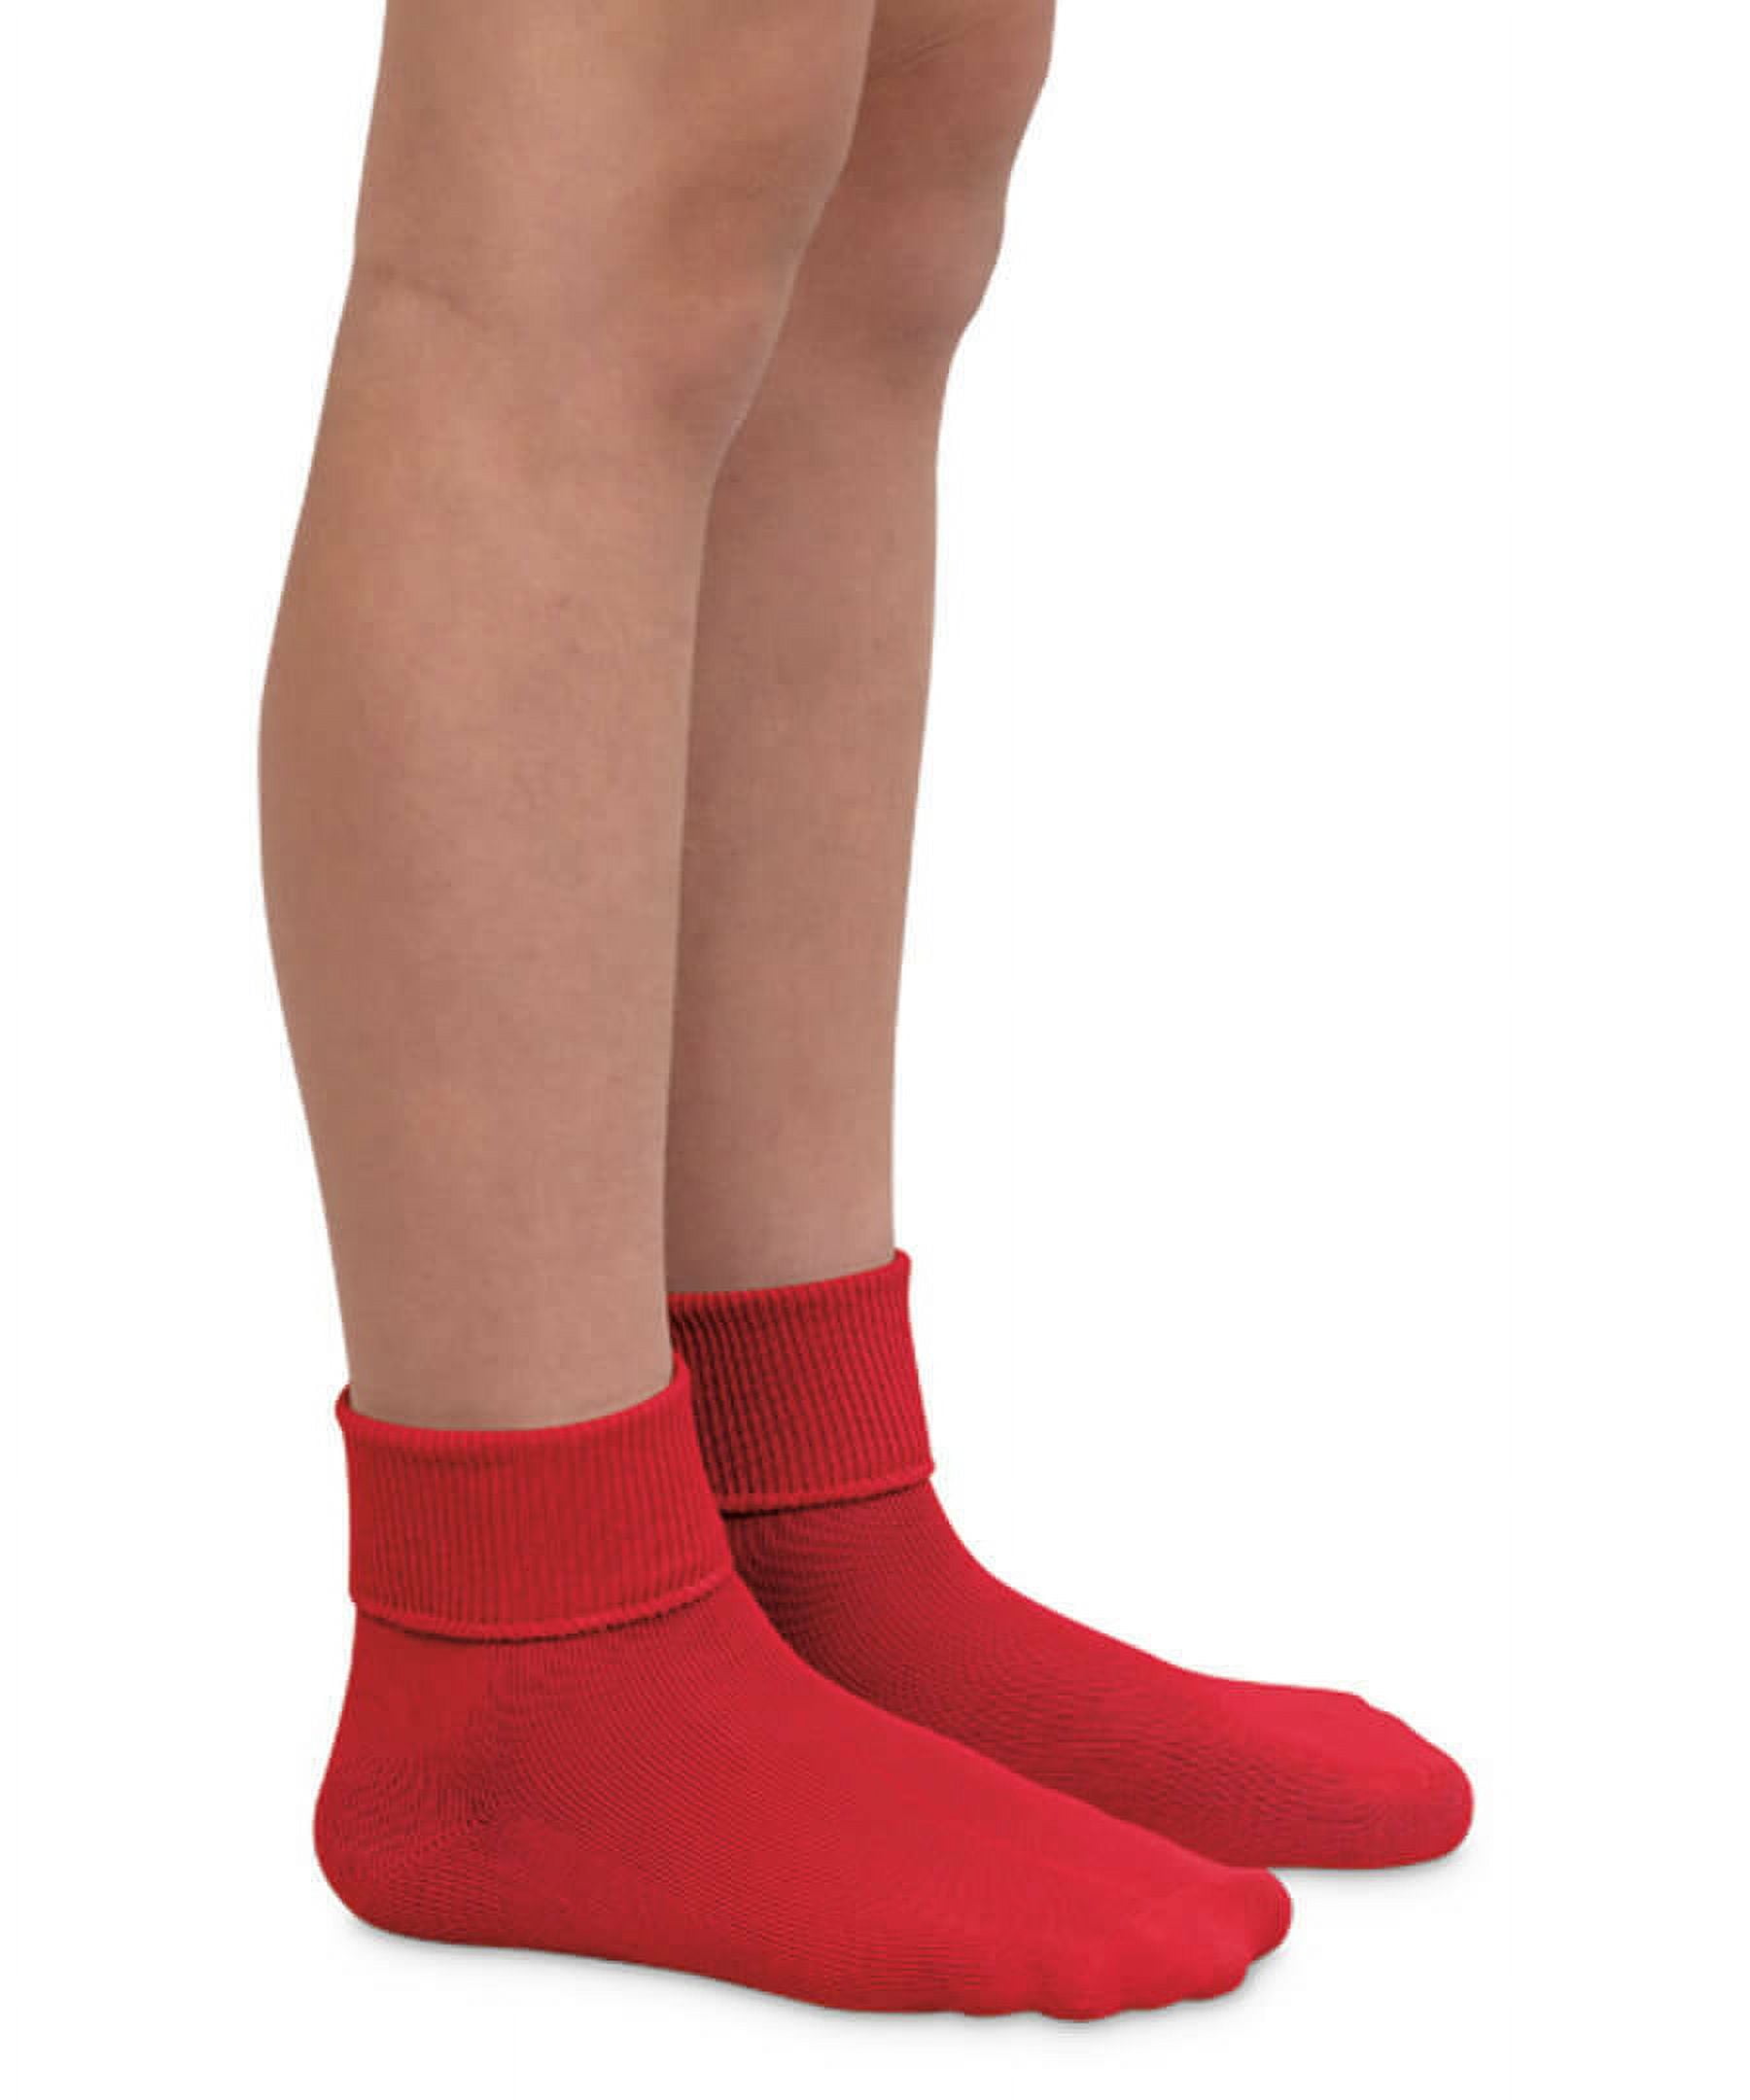 Jefferies Socks School Uniform Smooth Toe Organic Cotton Tights 1 Pair